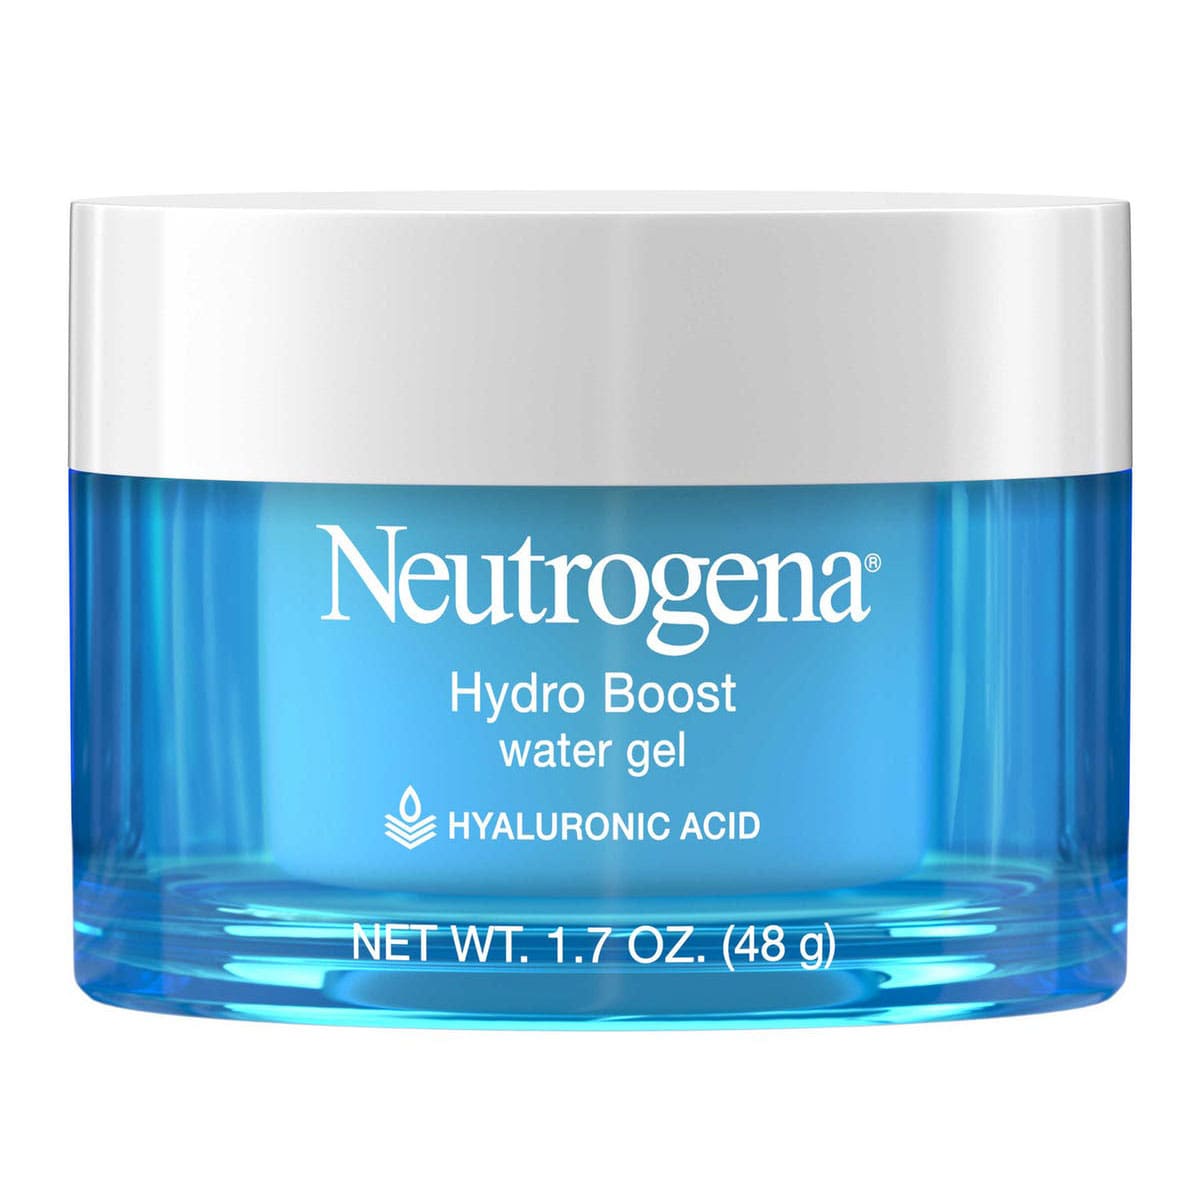 Kem dưỡng ẩm Neutrogena cho da dầu